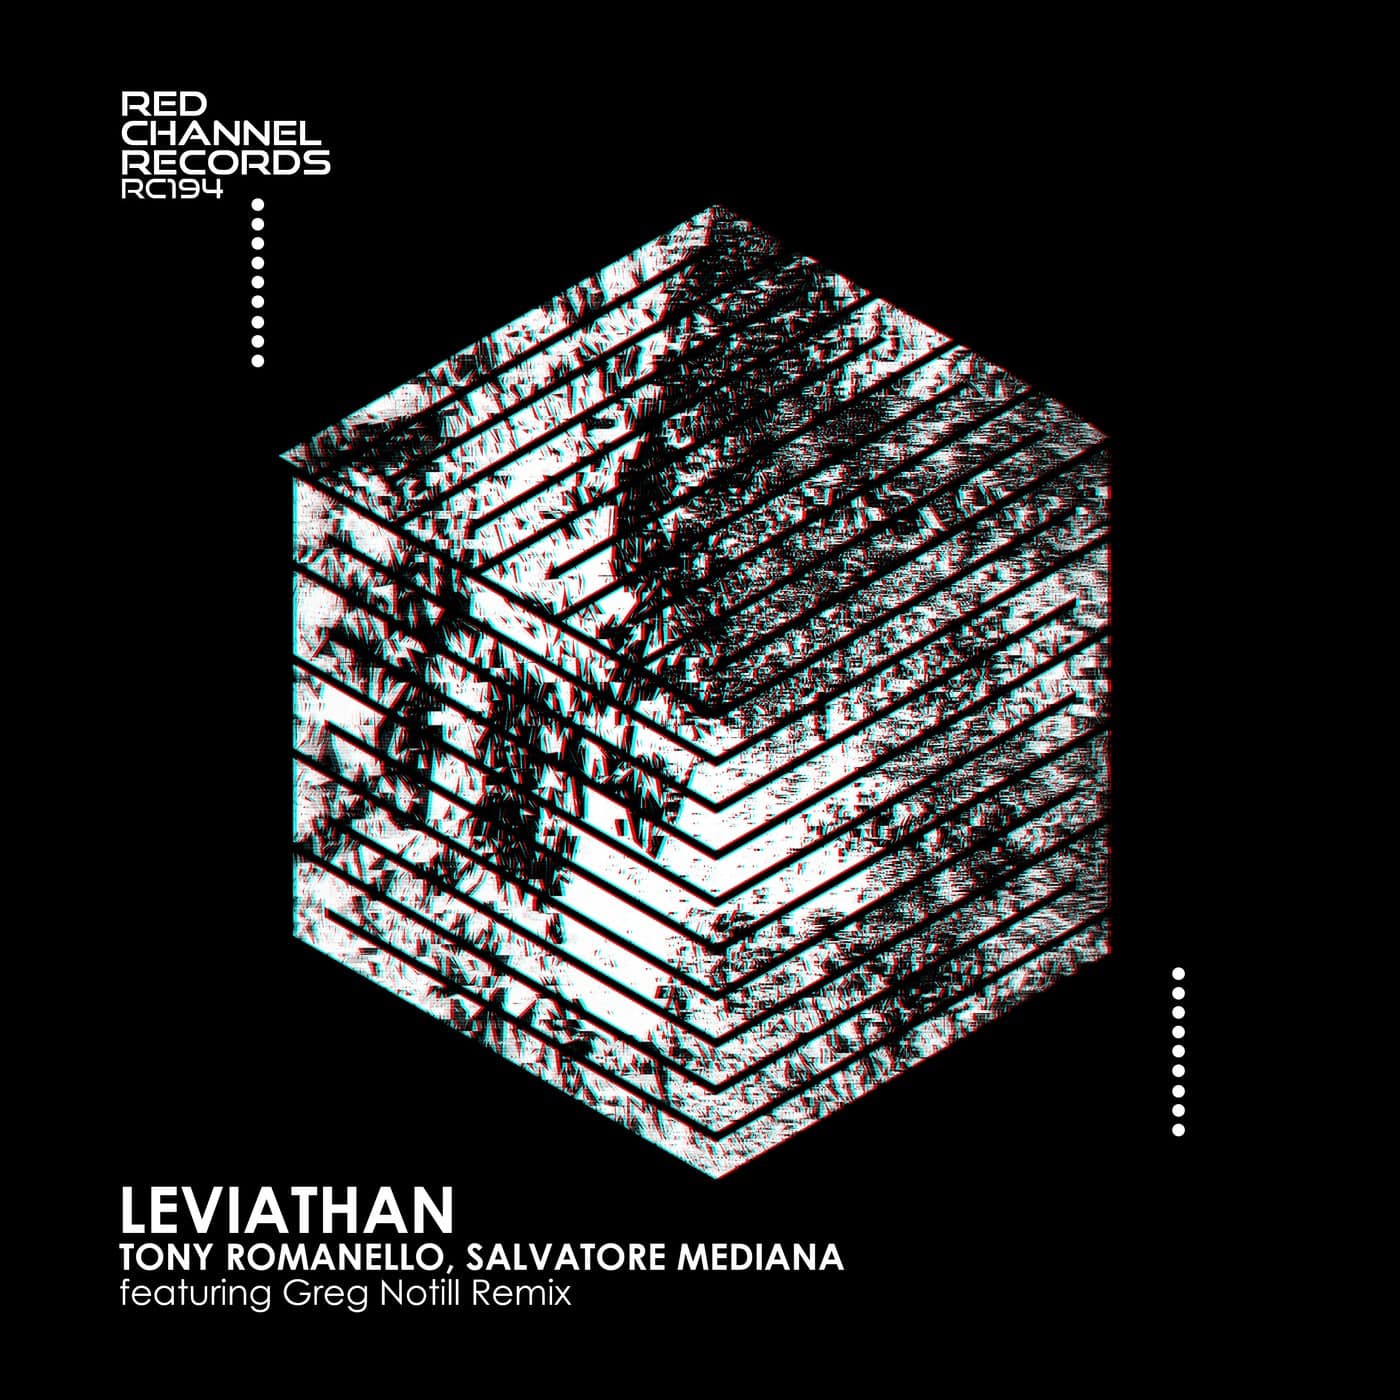 image cover: Tony Romanello, Salvatore Mediana - Leviathan / RC194